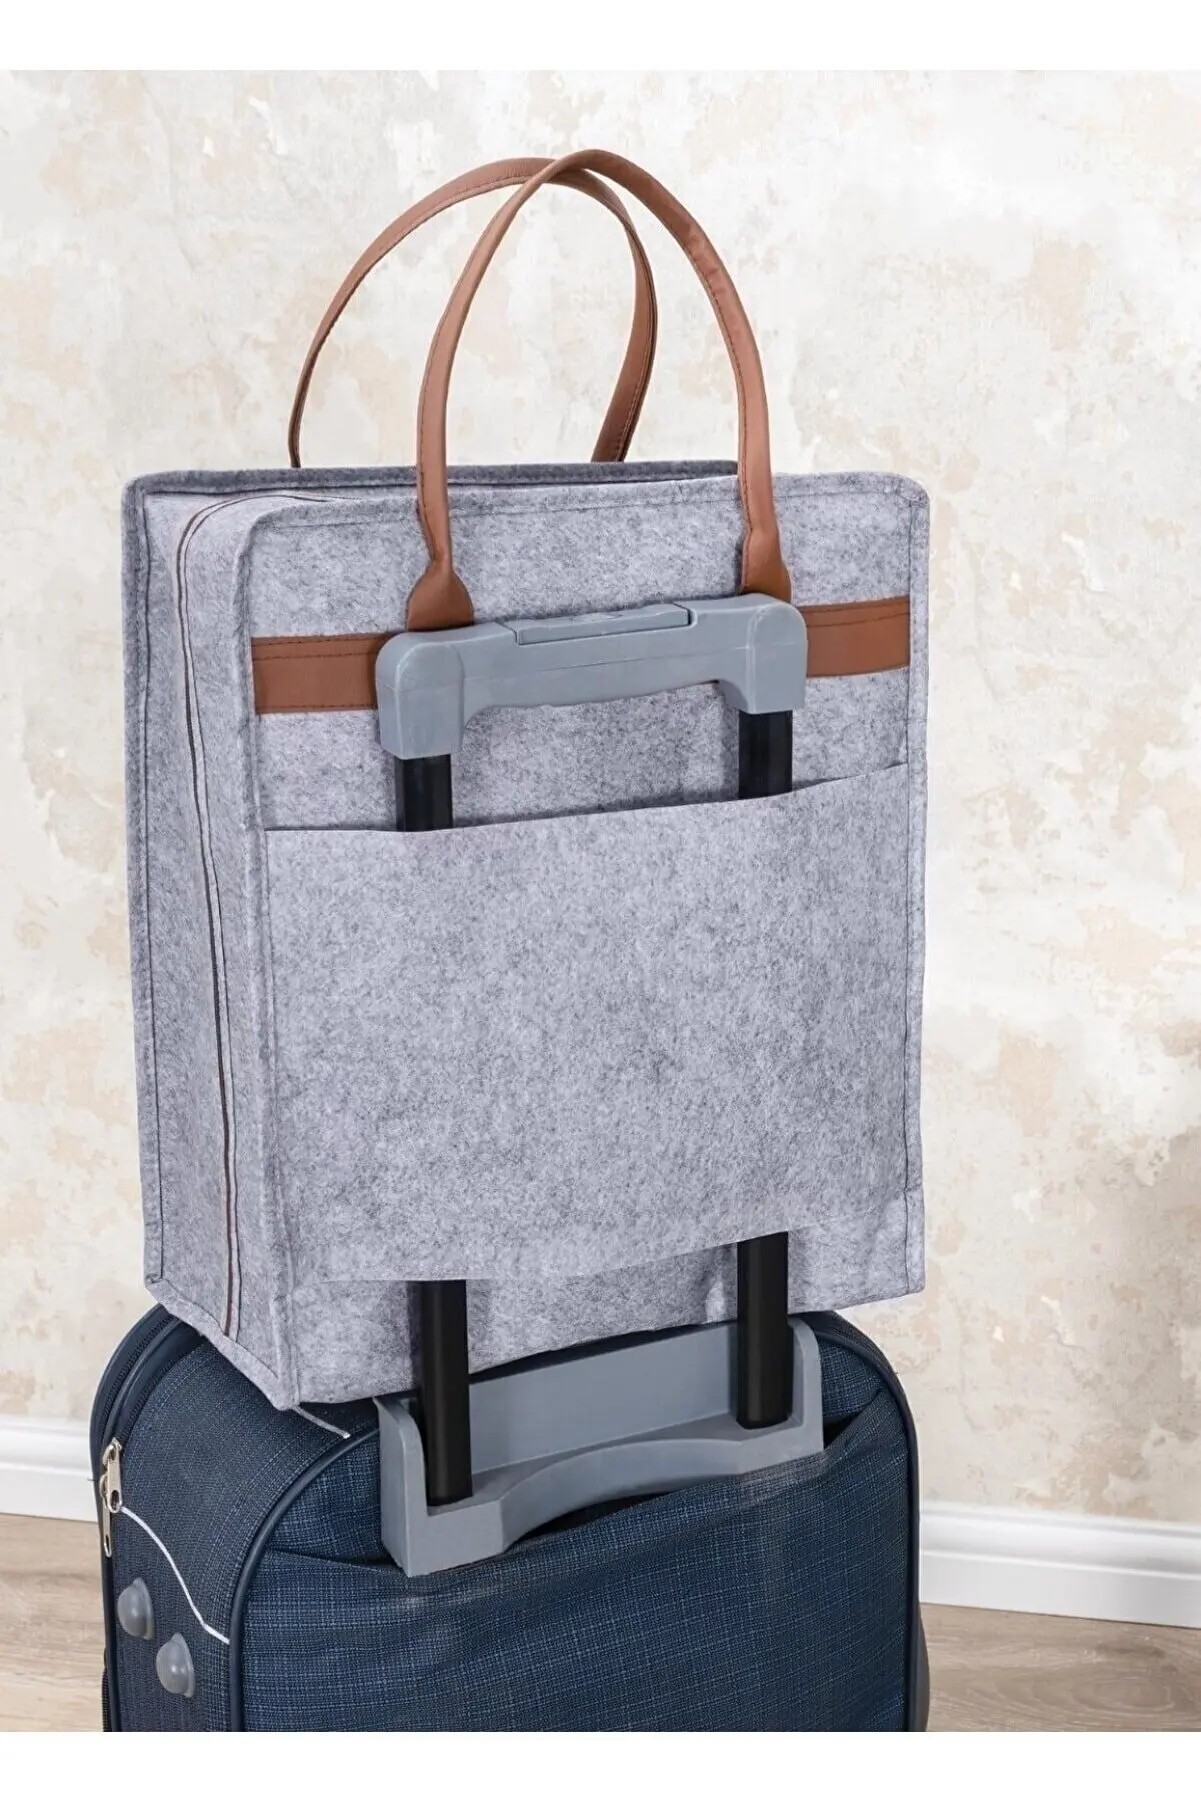 Felt Fabric Leather Handle Hanging Travel Type Folding Zipper Shoes Suitcases Bag Storage Bag